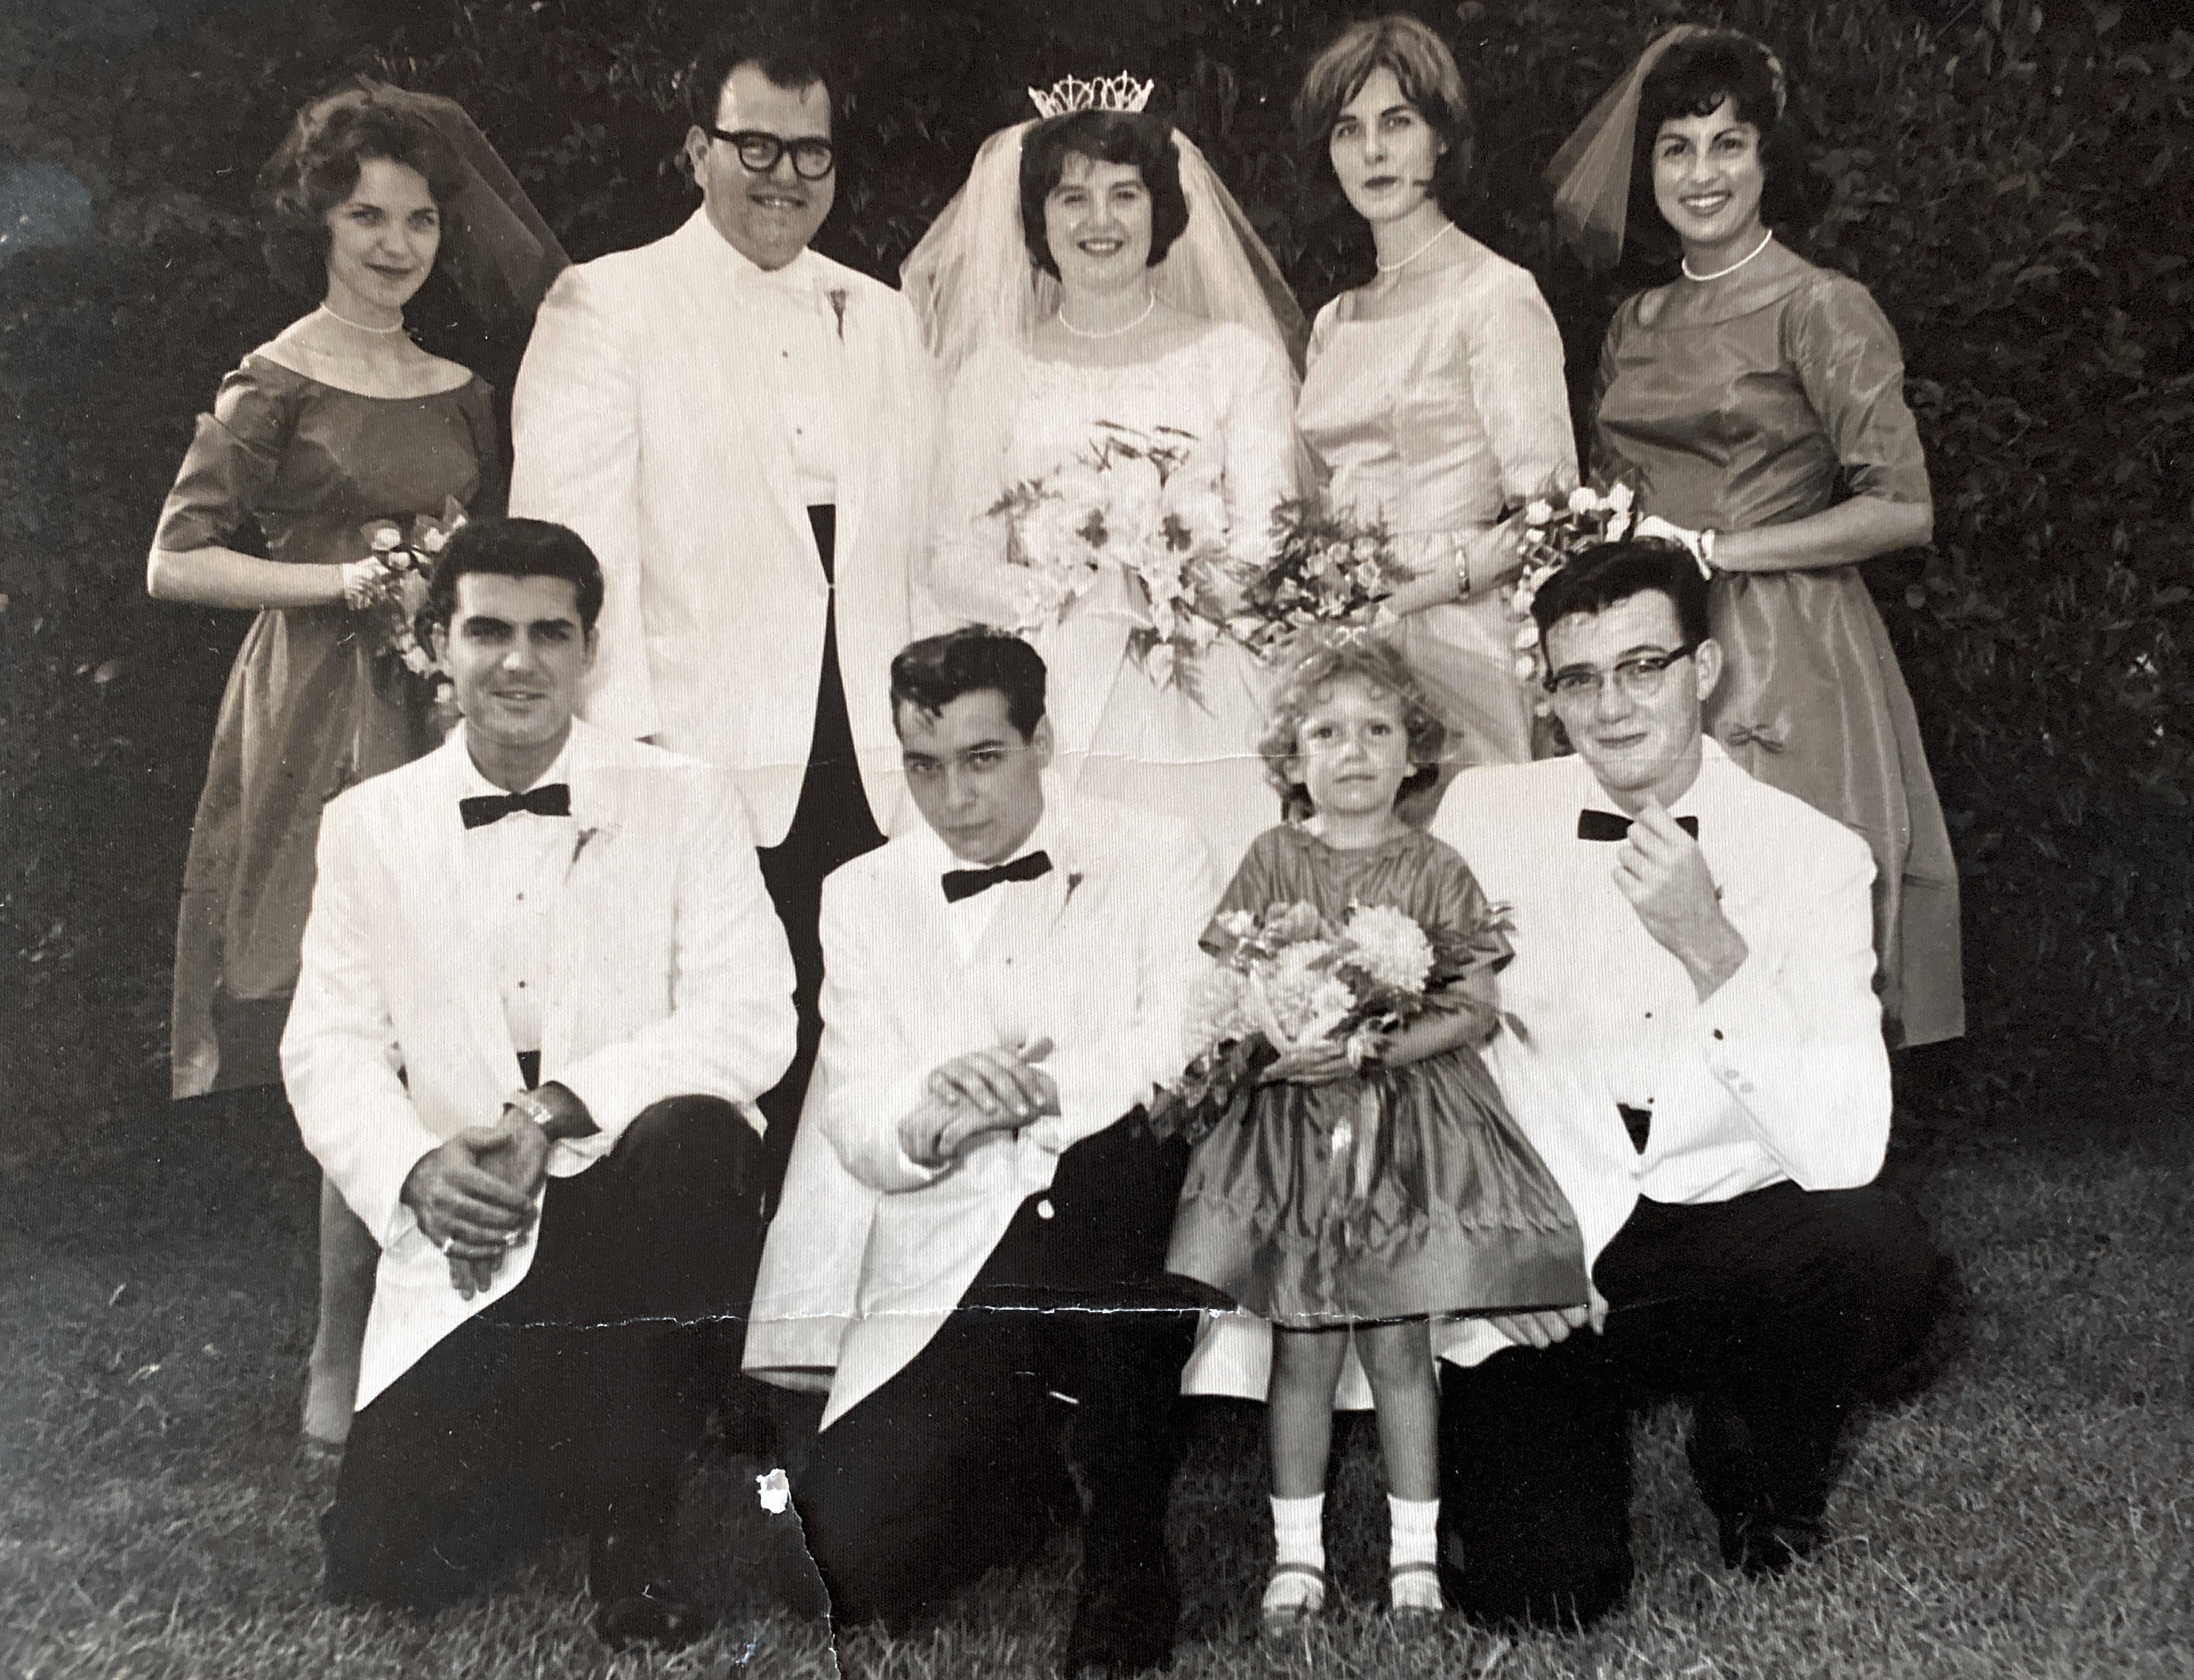 Carol and Frank Sorrentino Wedding September 1961